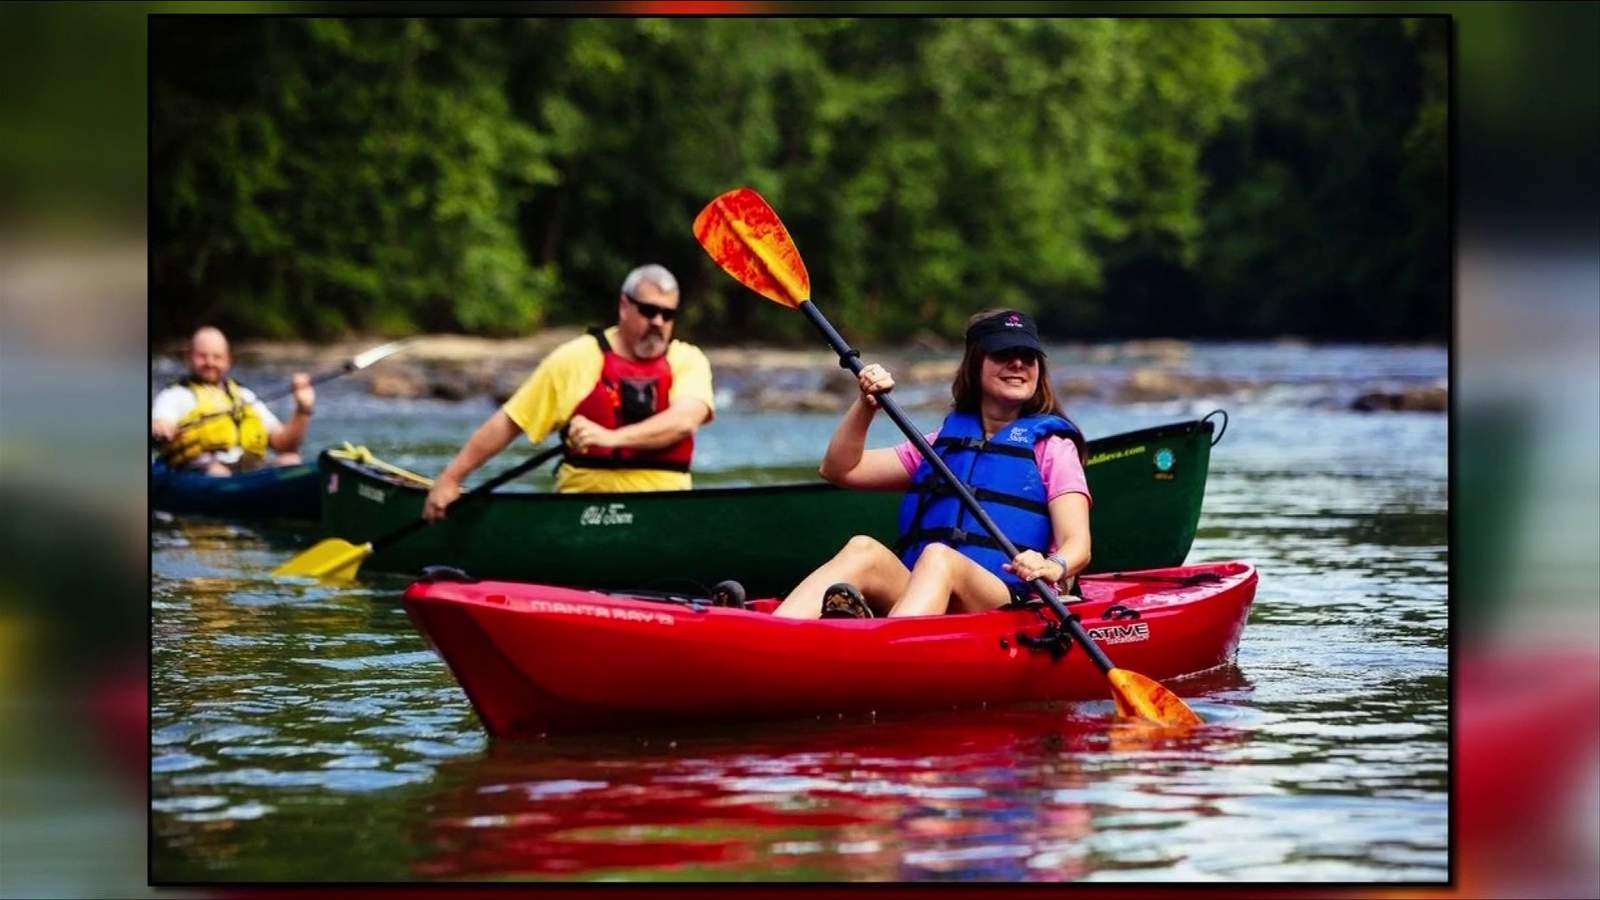 Roanoke River named third best spot for urban kayaking in nationwide vote